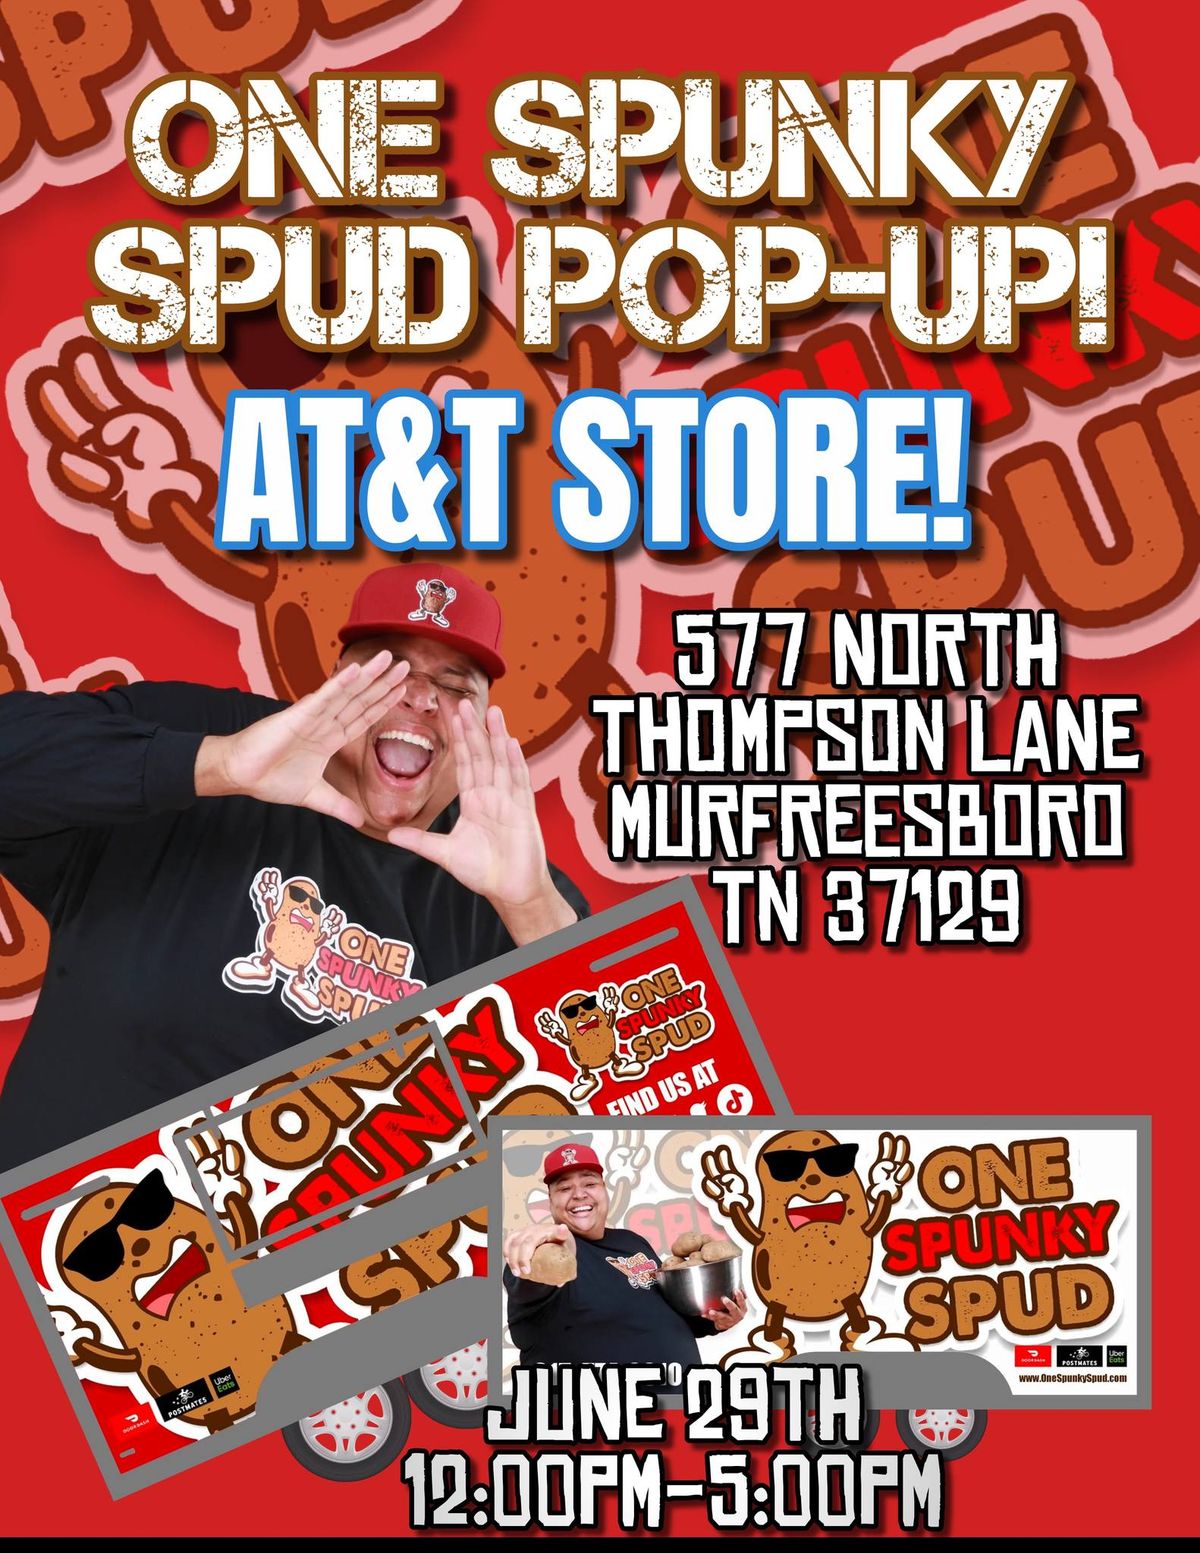 Murfreesboro x One Spunky Spud pop-up!